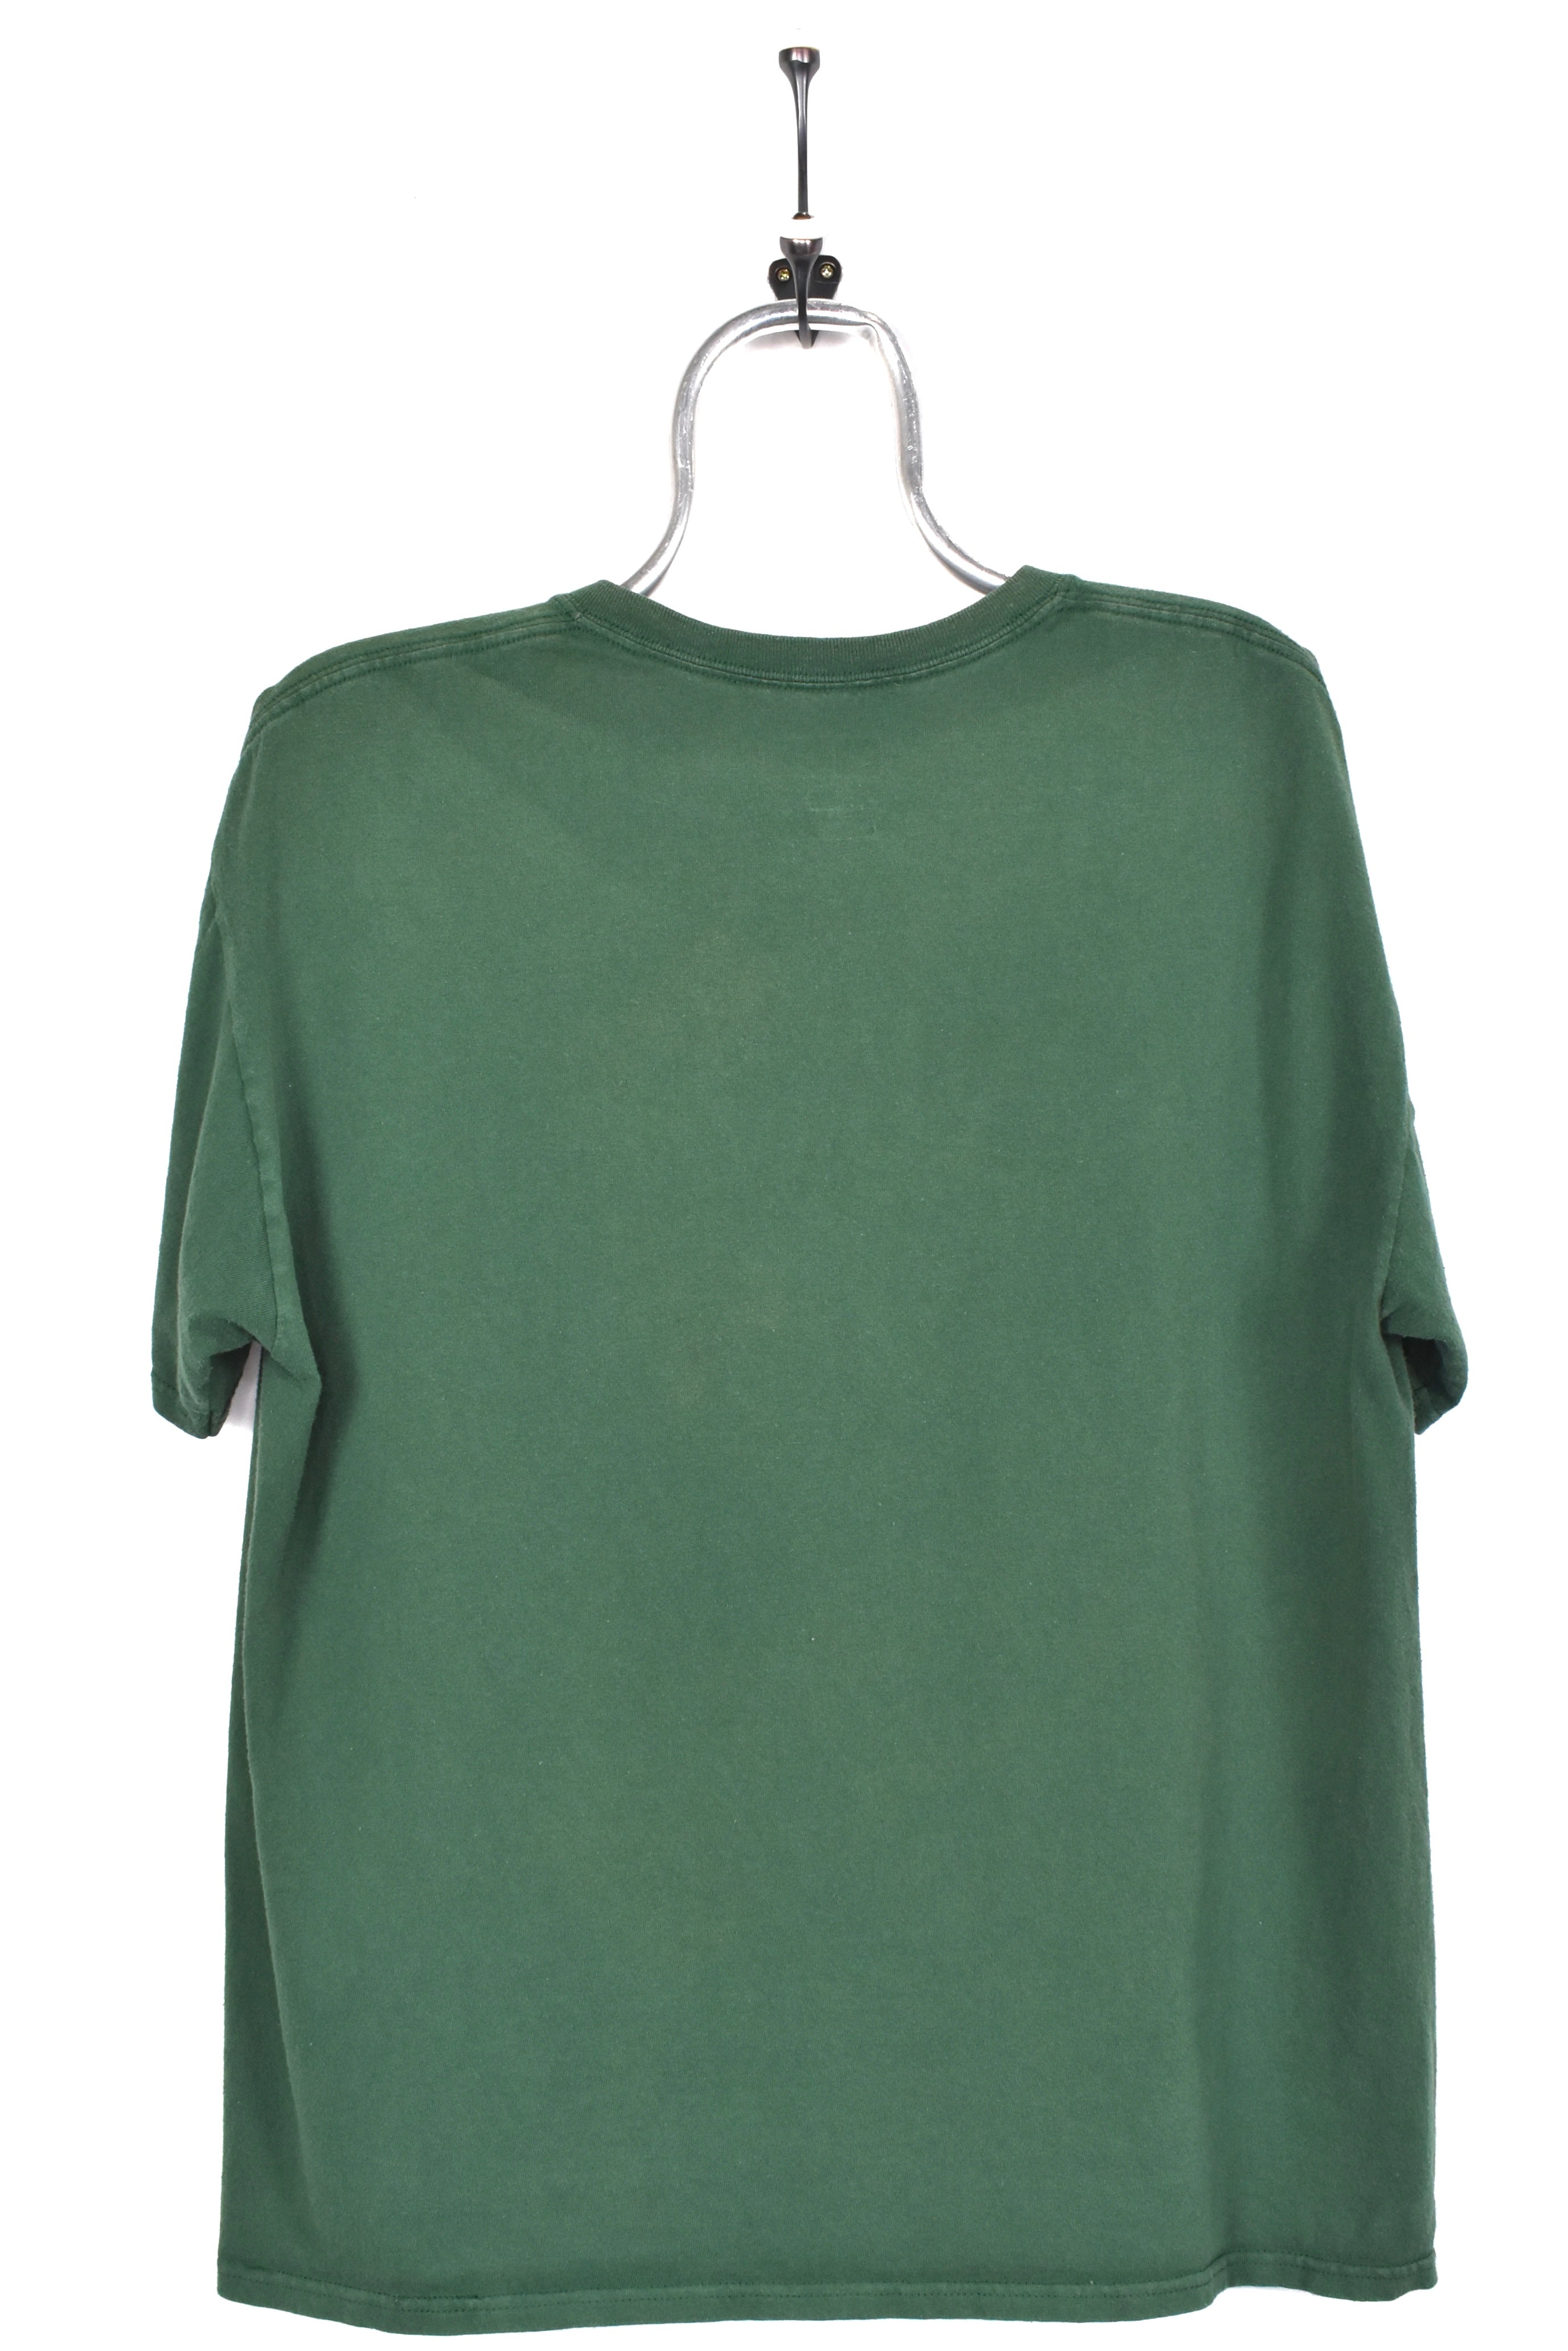 Vintage Green Bay Packers shirt, NFL green graphic tee - AU Medium PRO SPORT